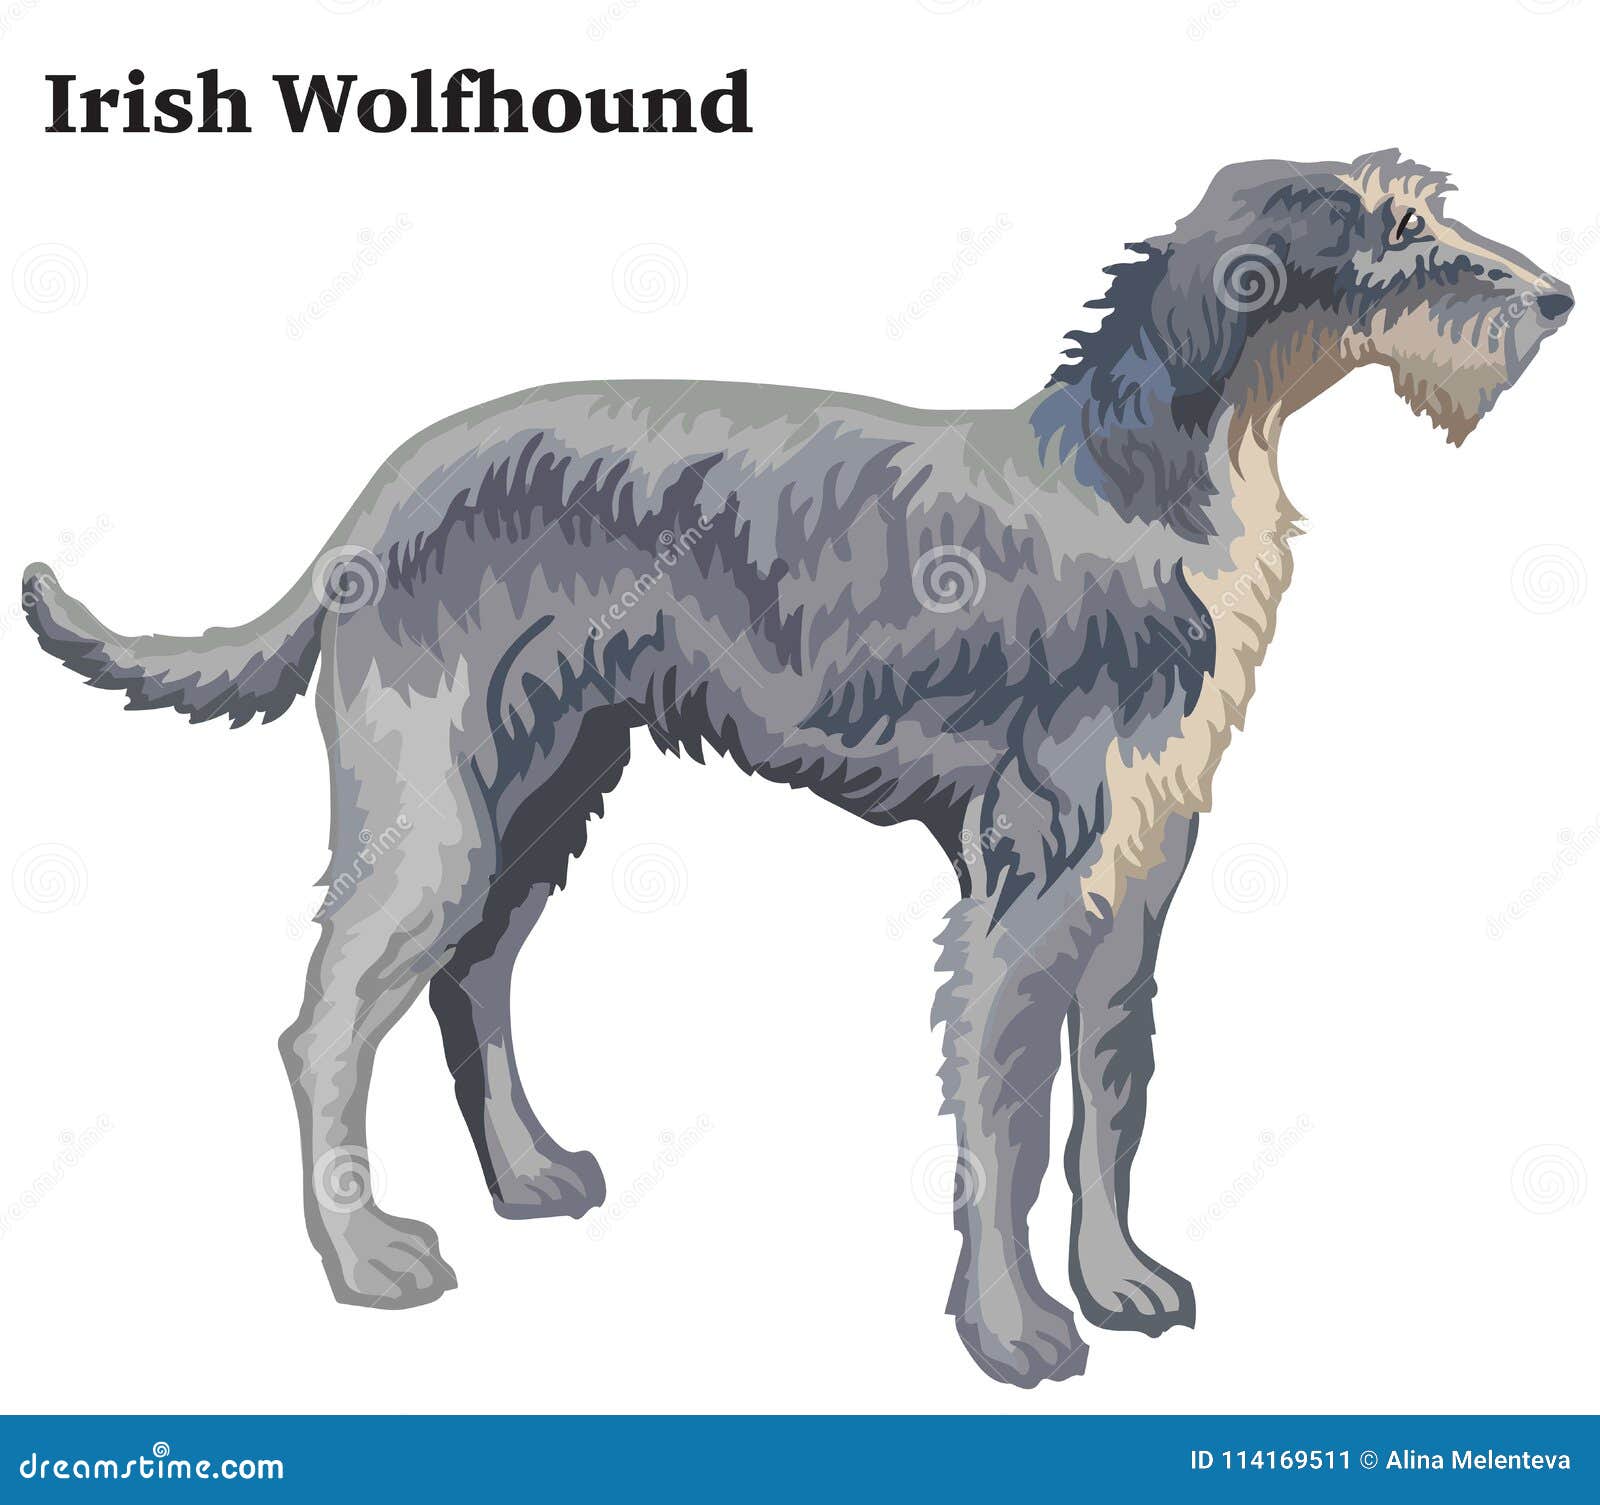 Heavyweight Pigment-Dyed Hooded Sweatshirt with Irish Wolfhound Silhouette 